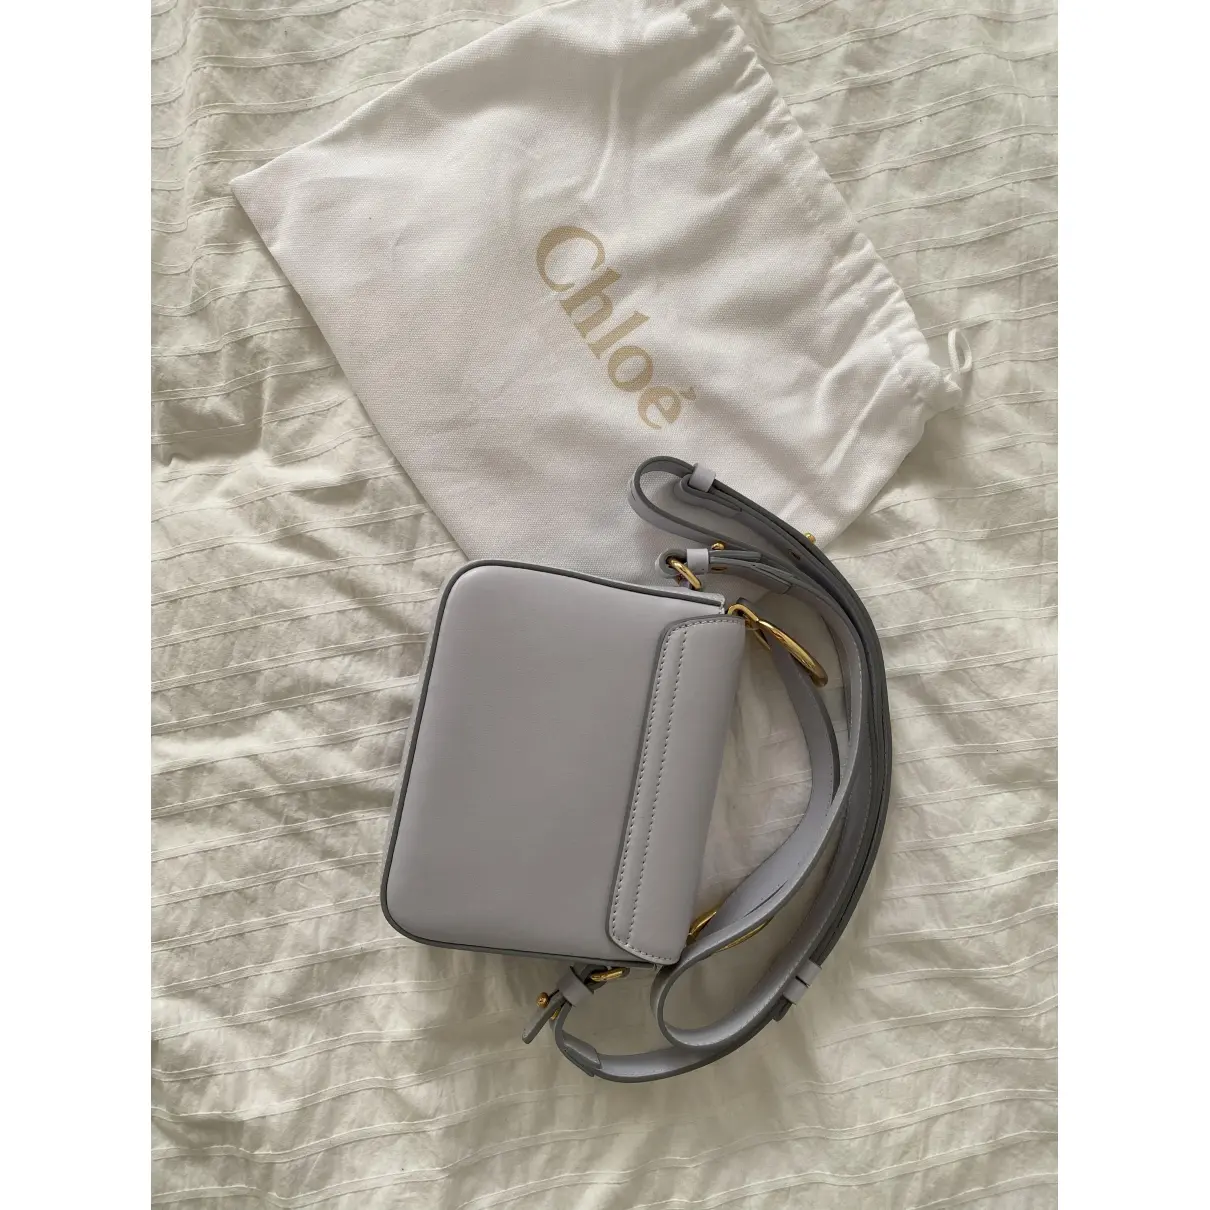 Buy Chloé C leather handbag online